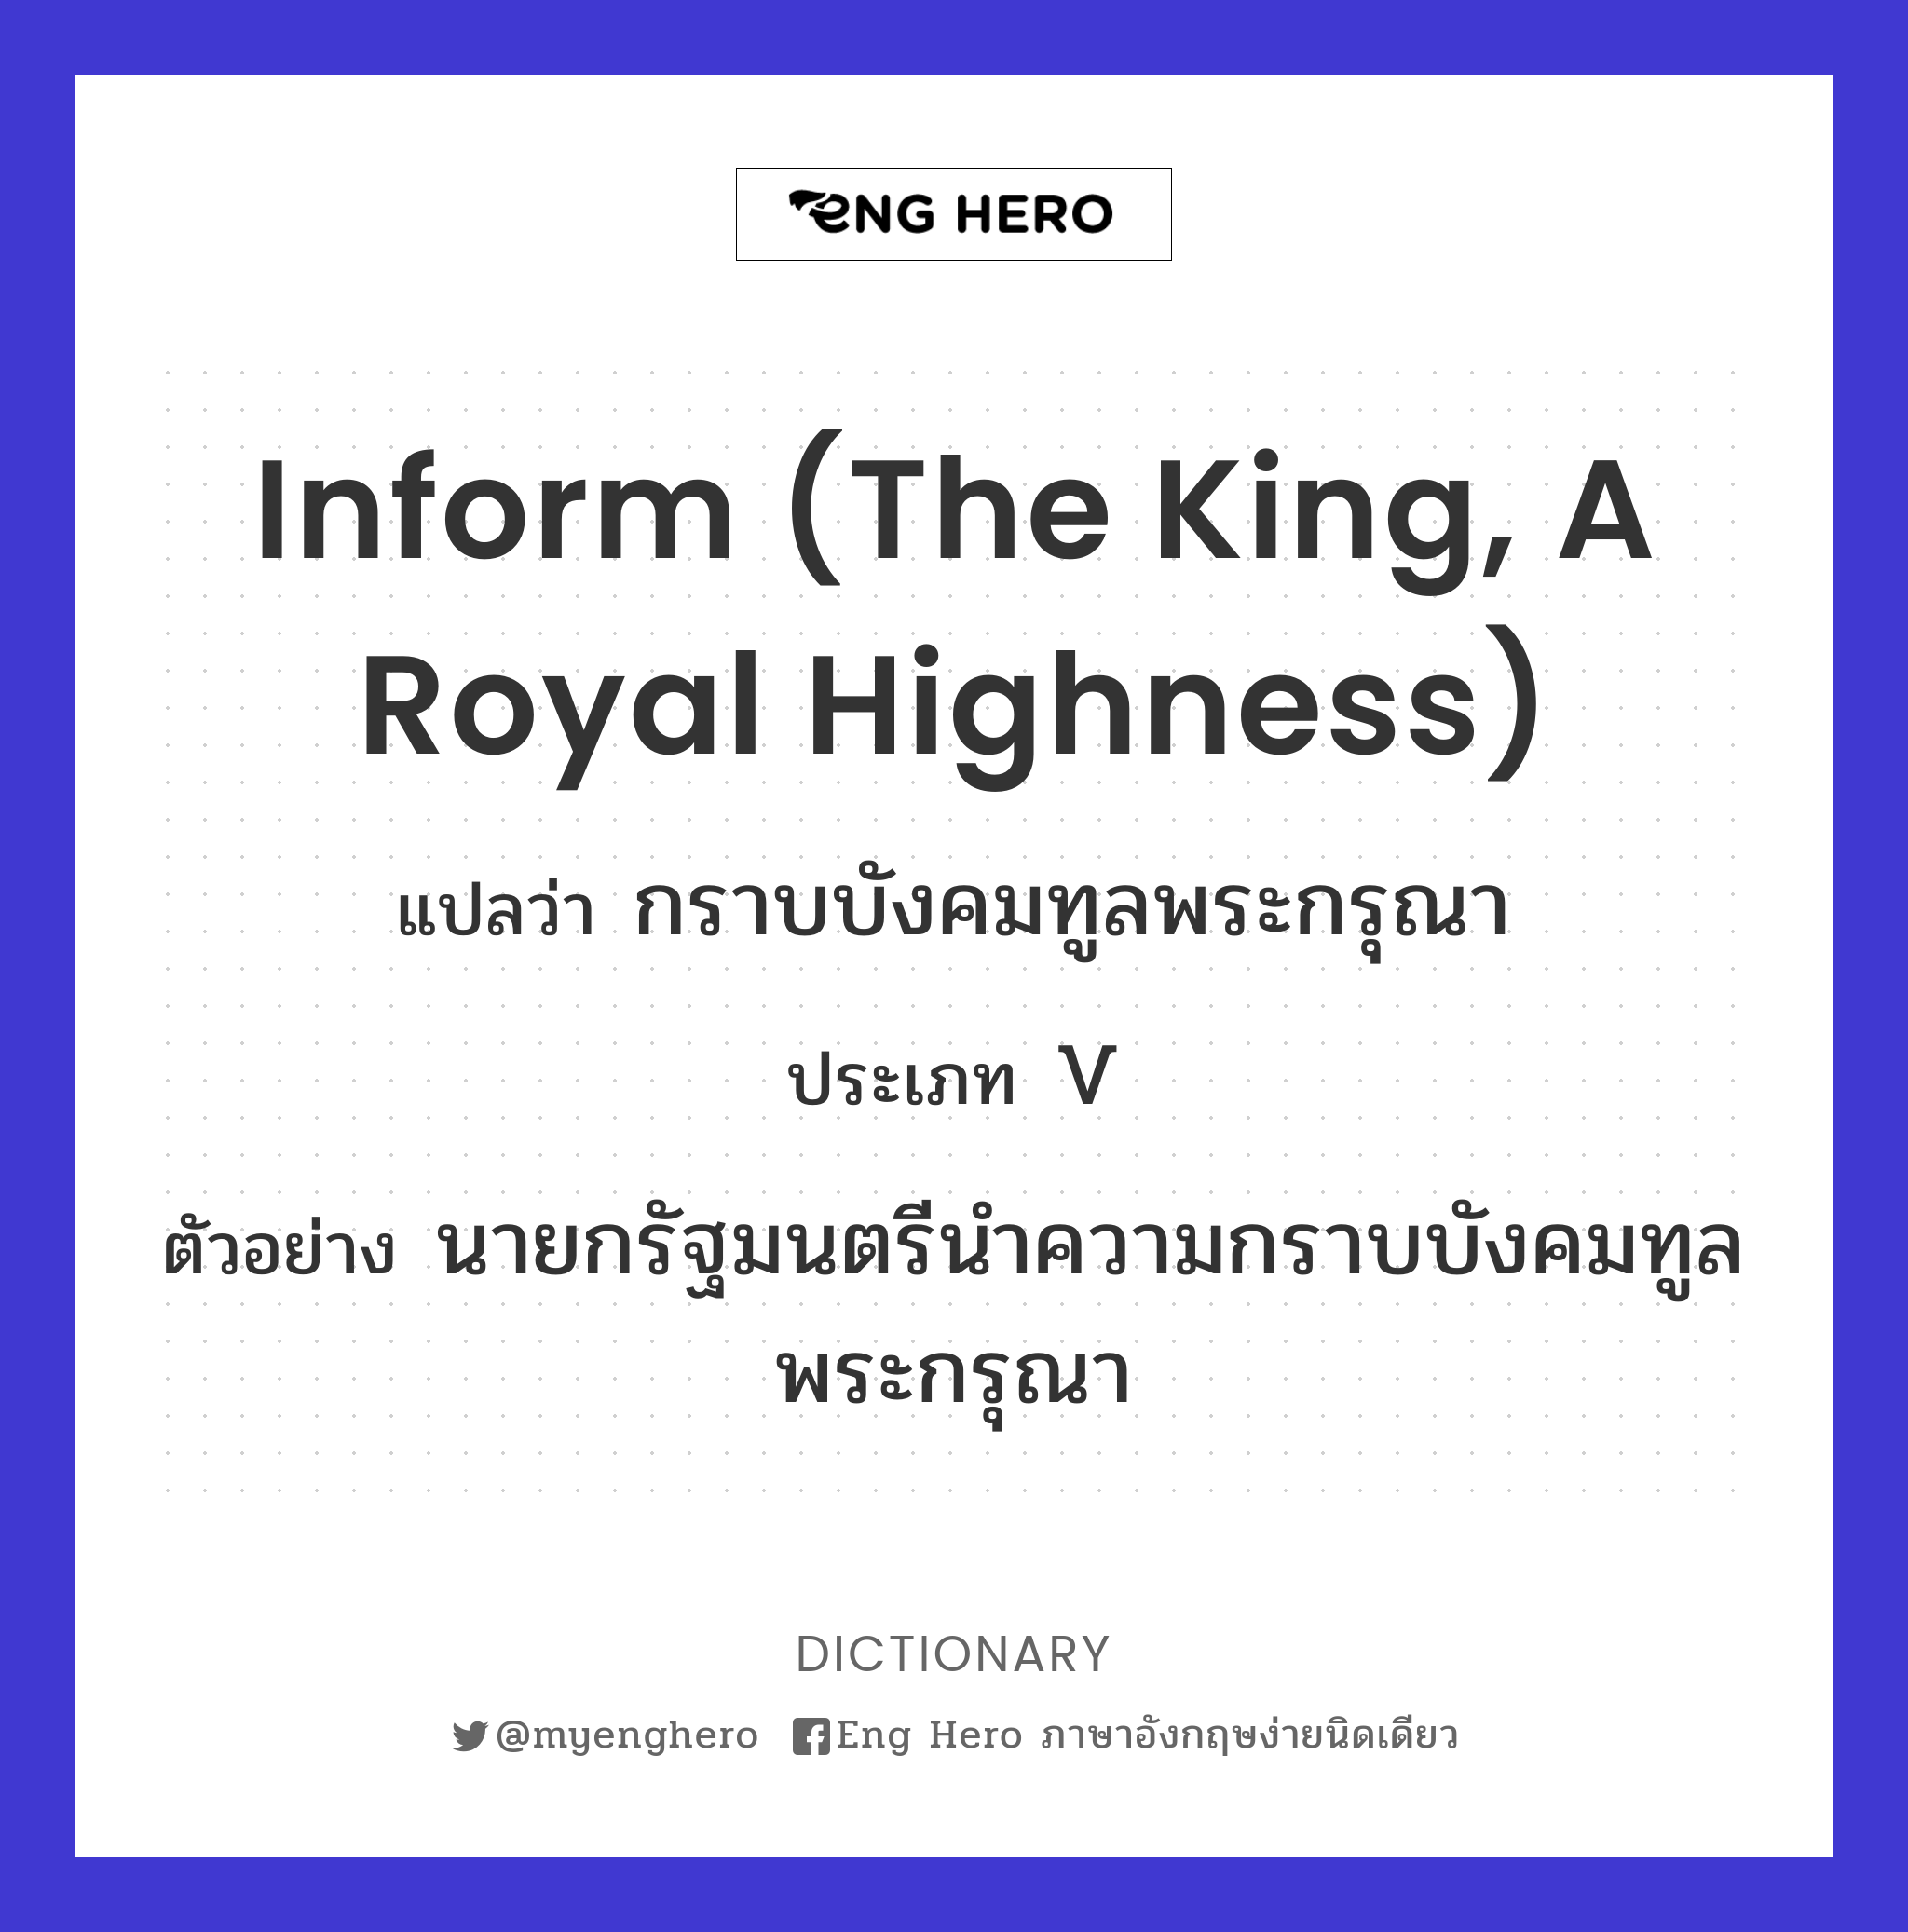 inform (The king, a Royal Highness)